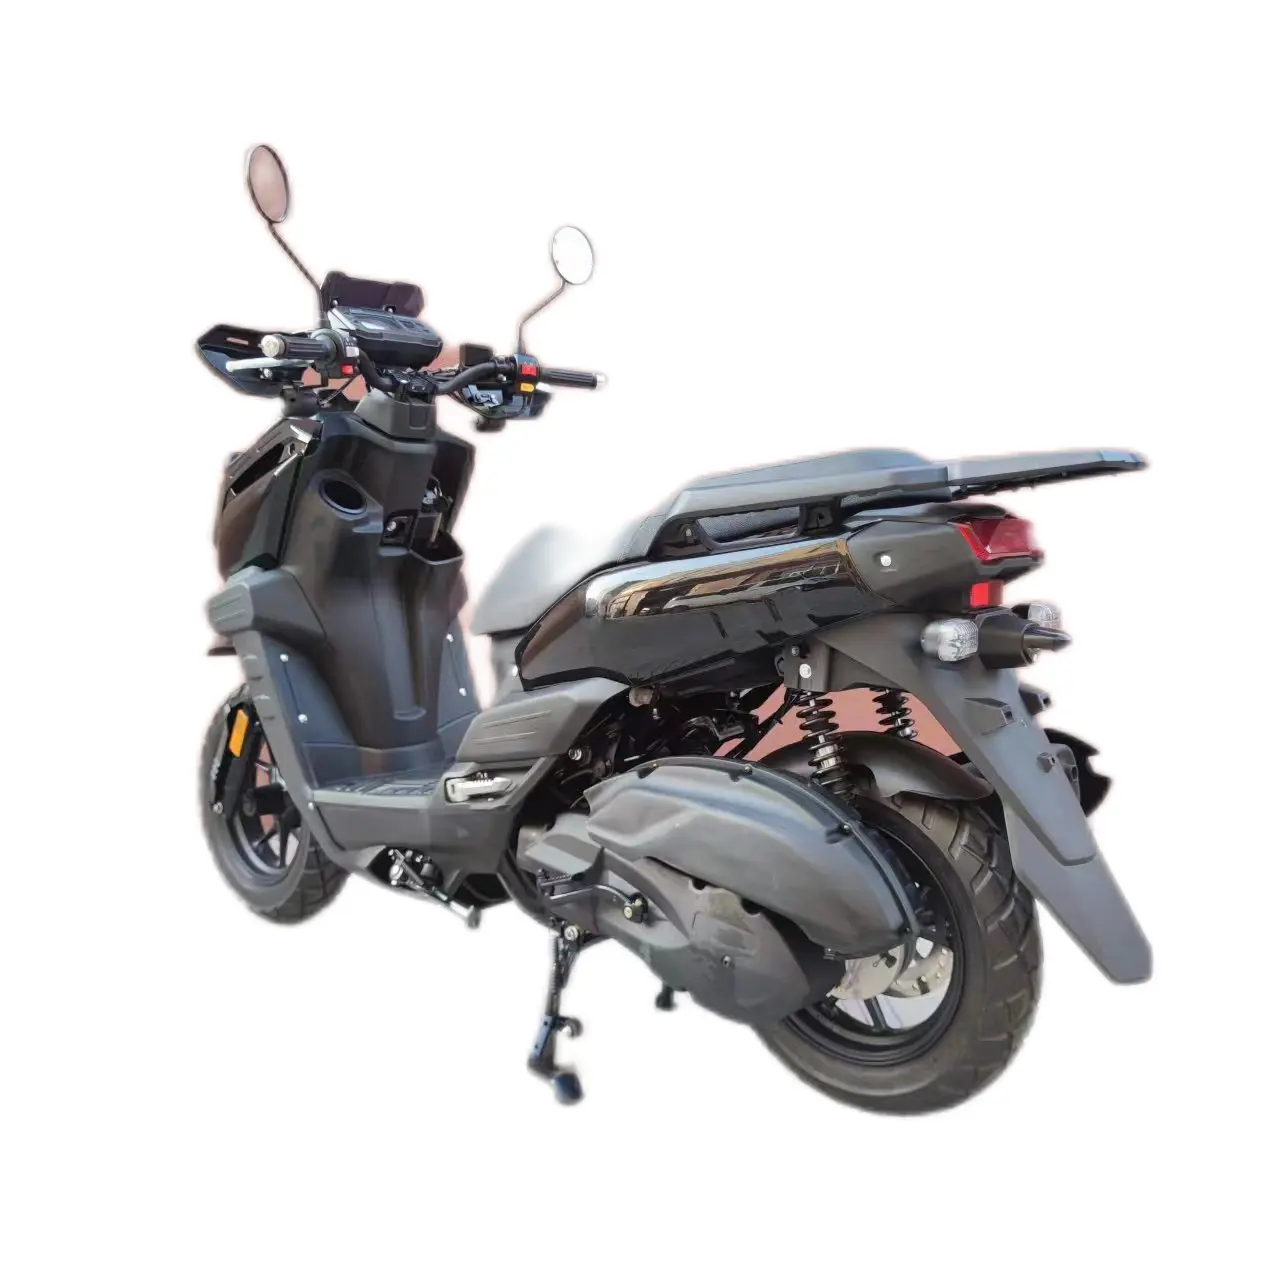 Sepeda motor Gas 150cc murah olahraga Cina bensin sepeda motor sepeda motor skuter 150cc